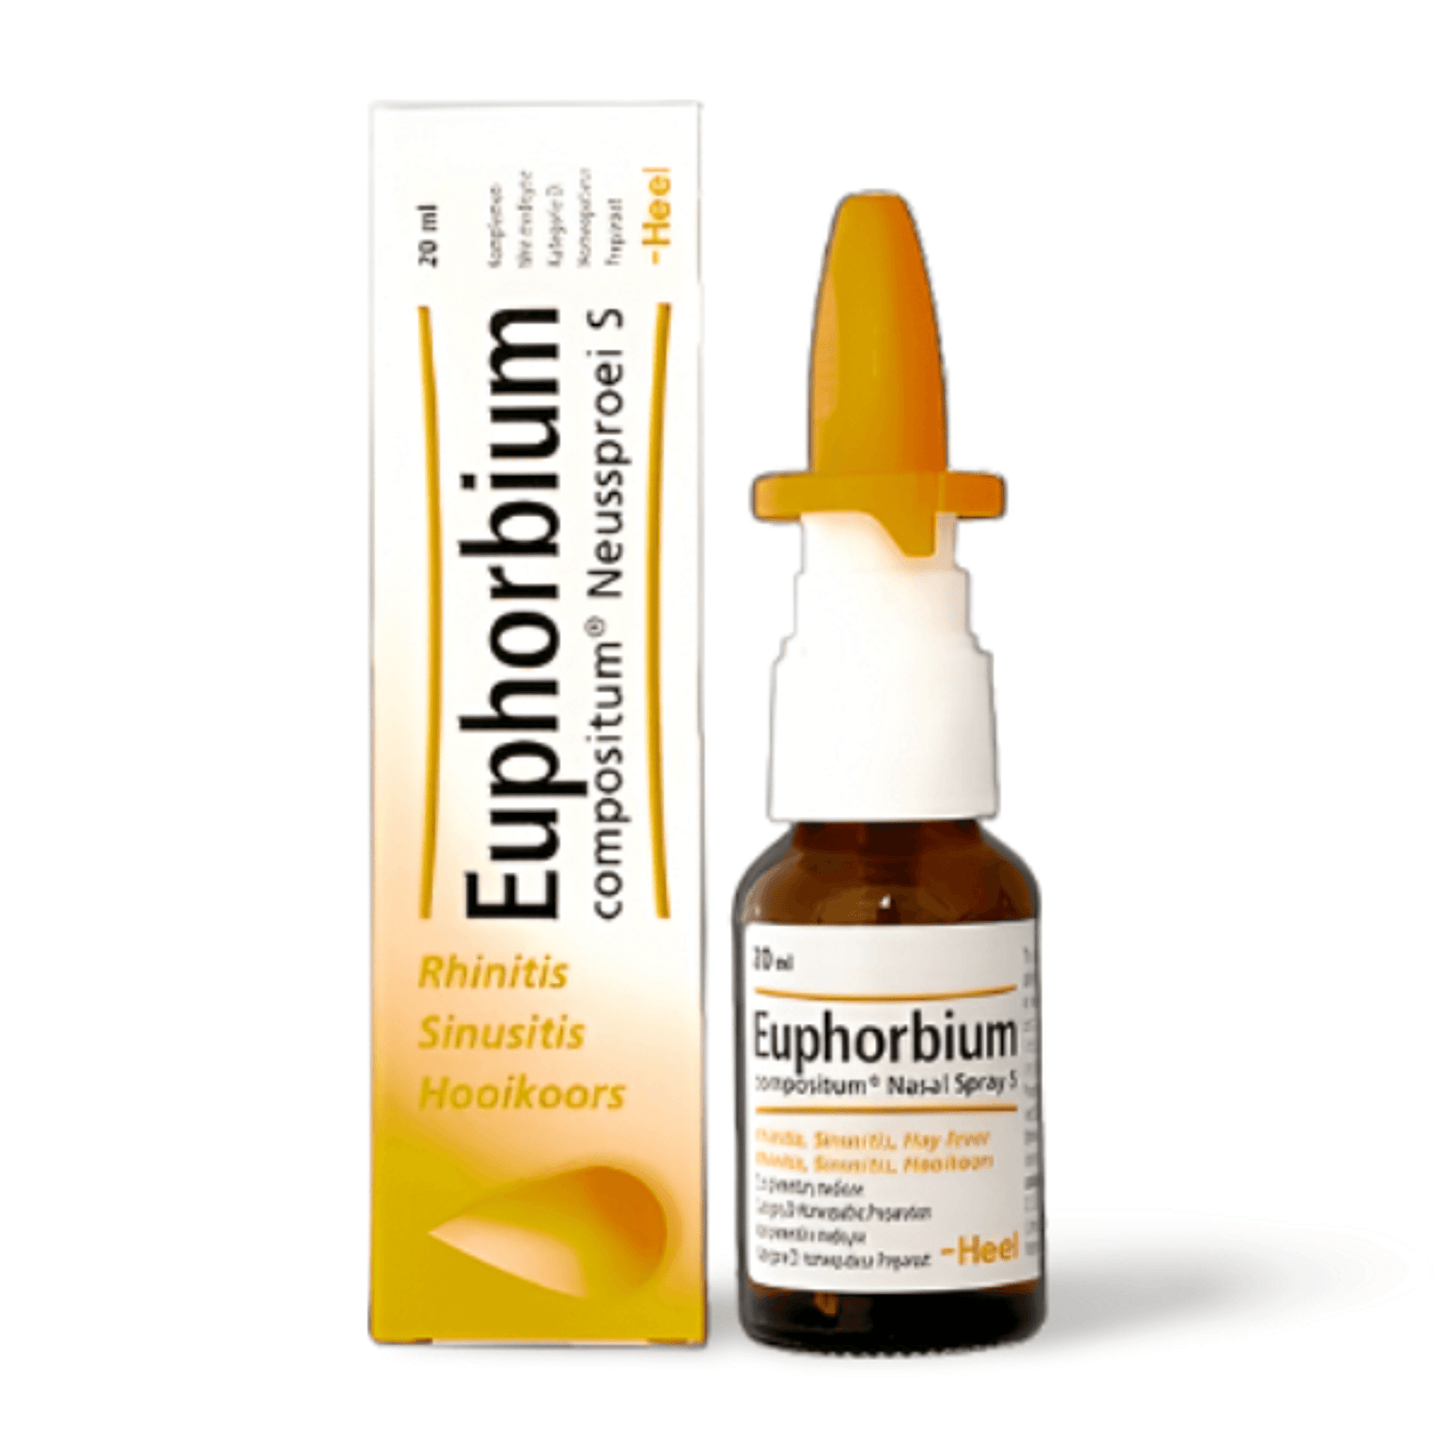 HEEL Euphorbium Nasal Spray - THE GOOD STUFF